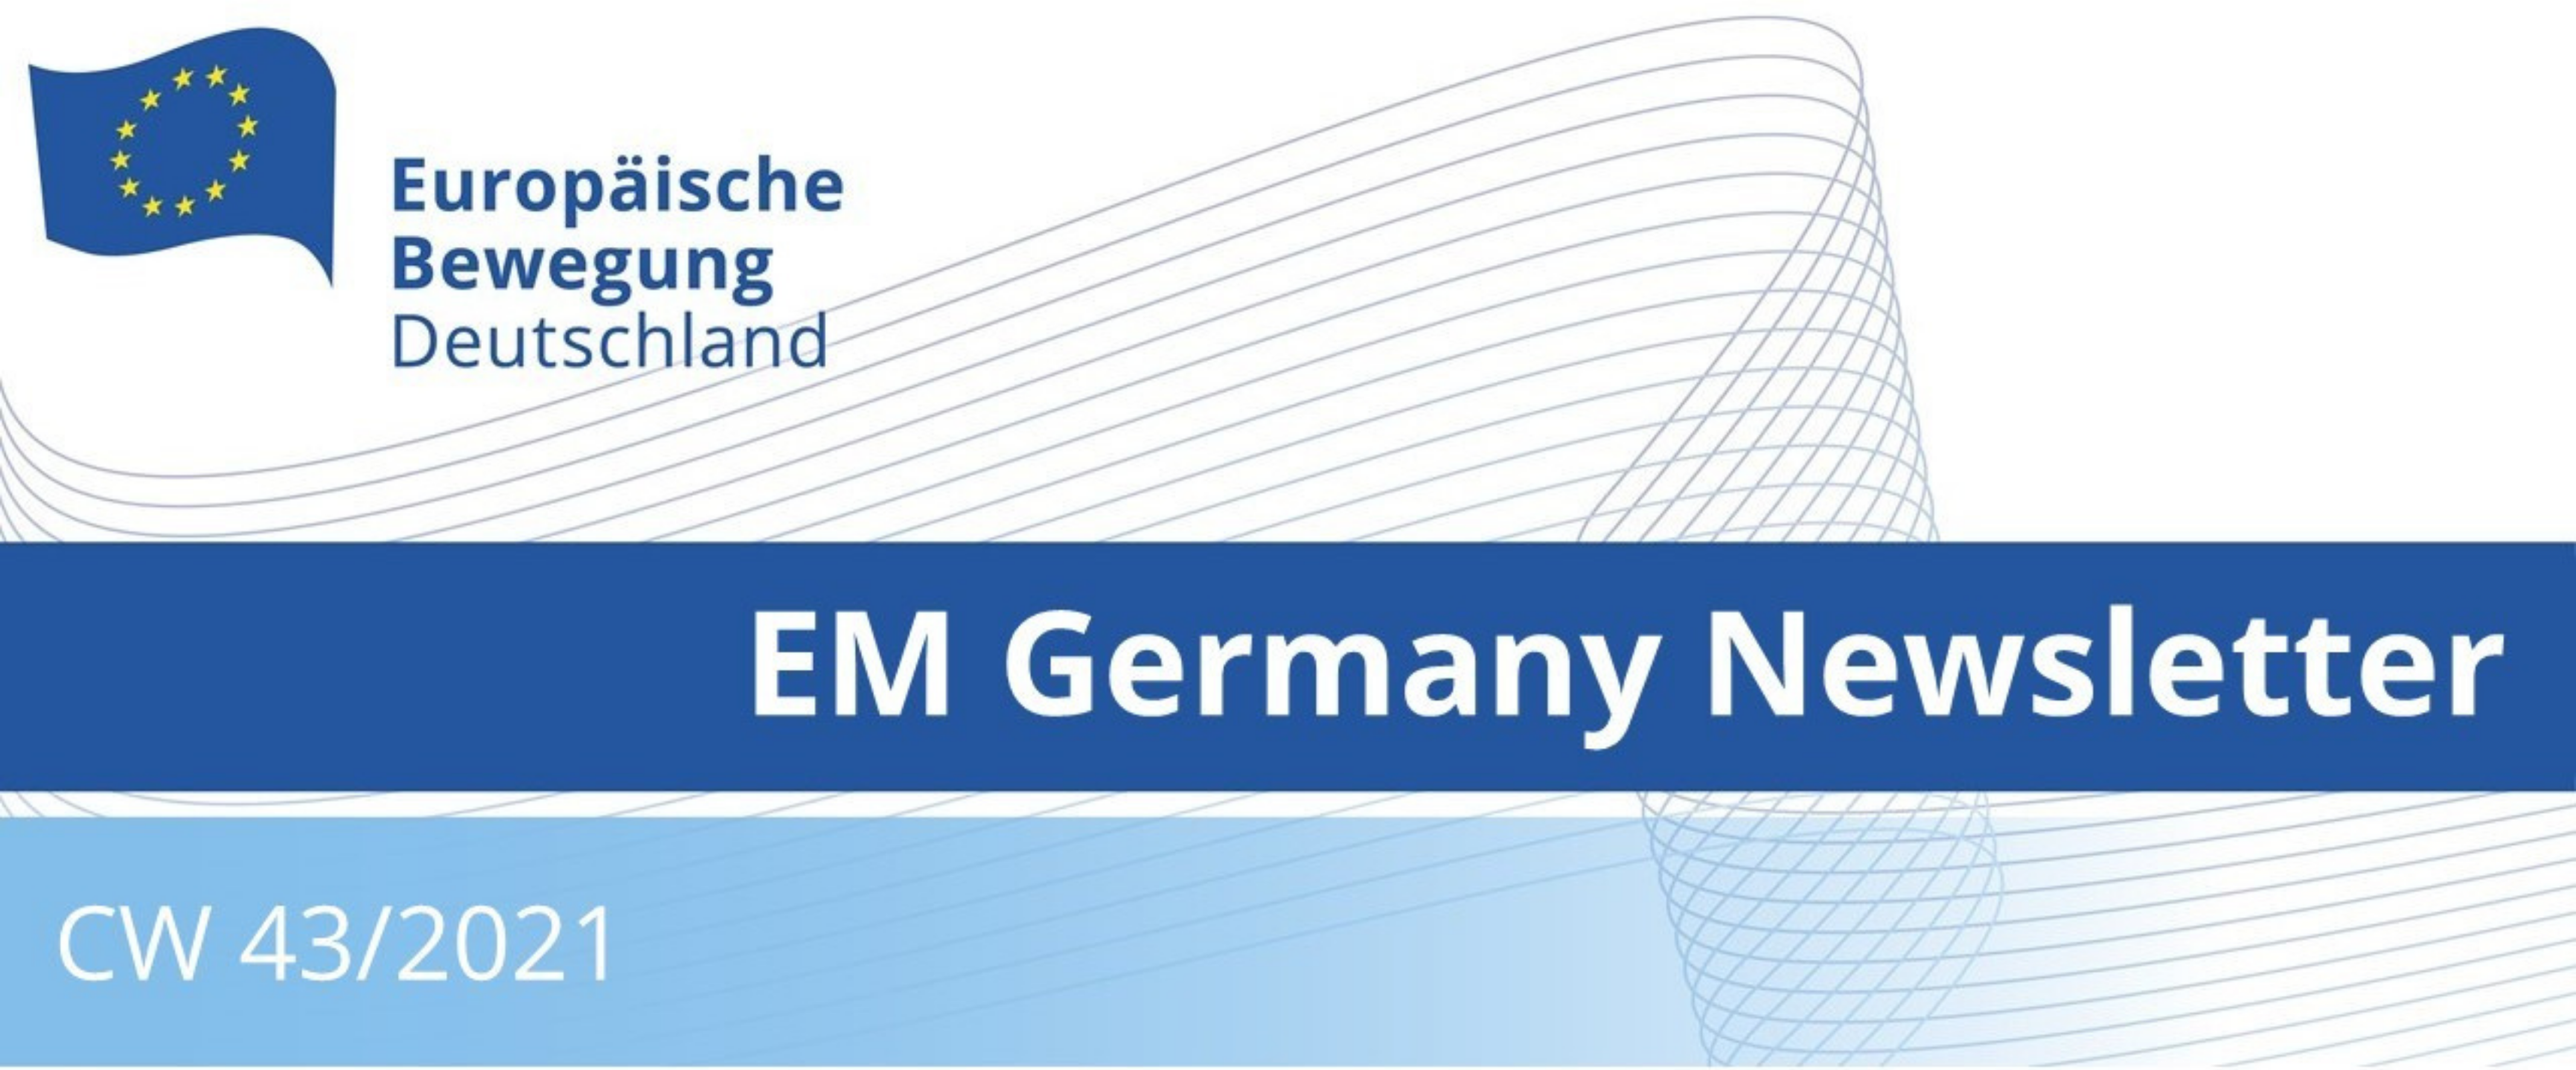 EM Germany Newsletter CW 43/2021 | Results of EM Germany’s General Assembly 2021